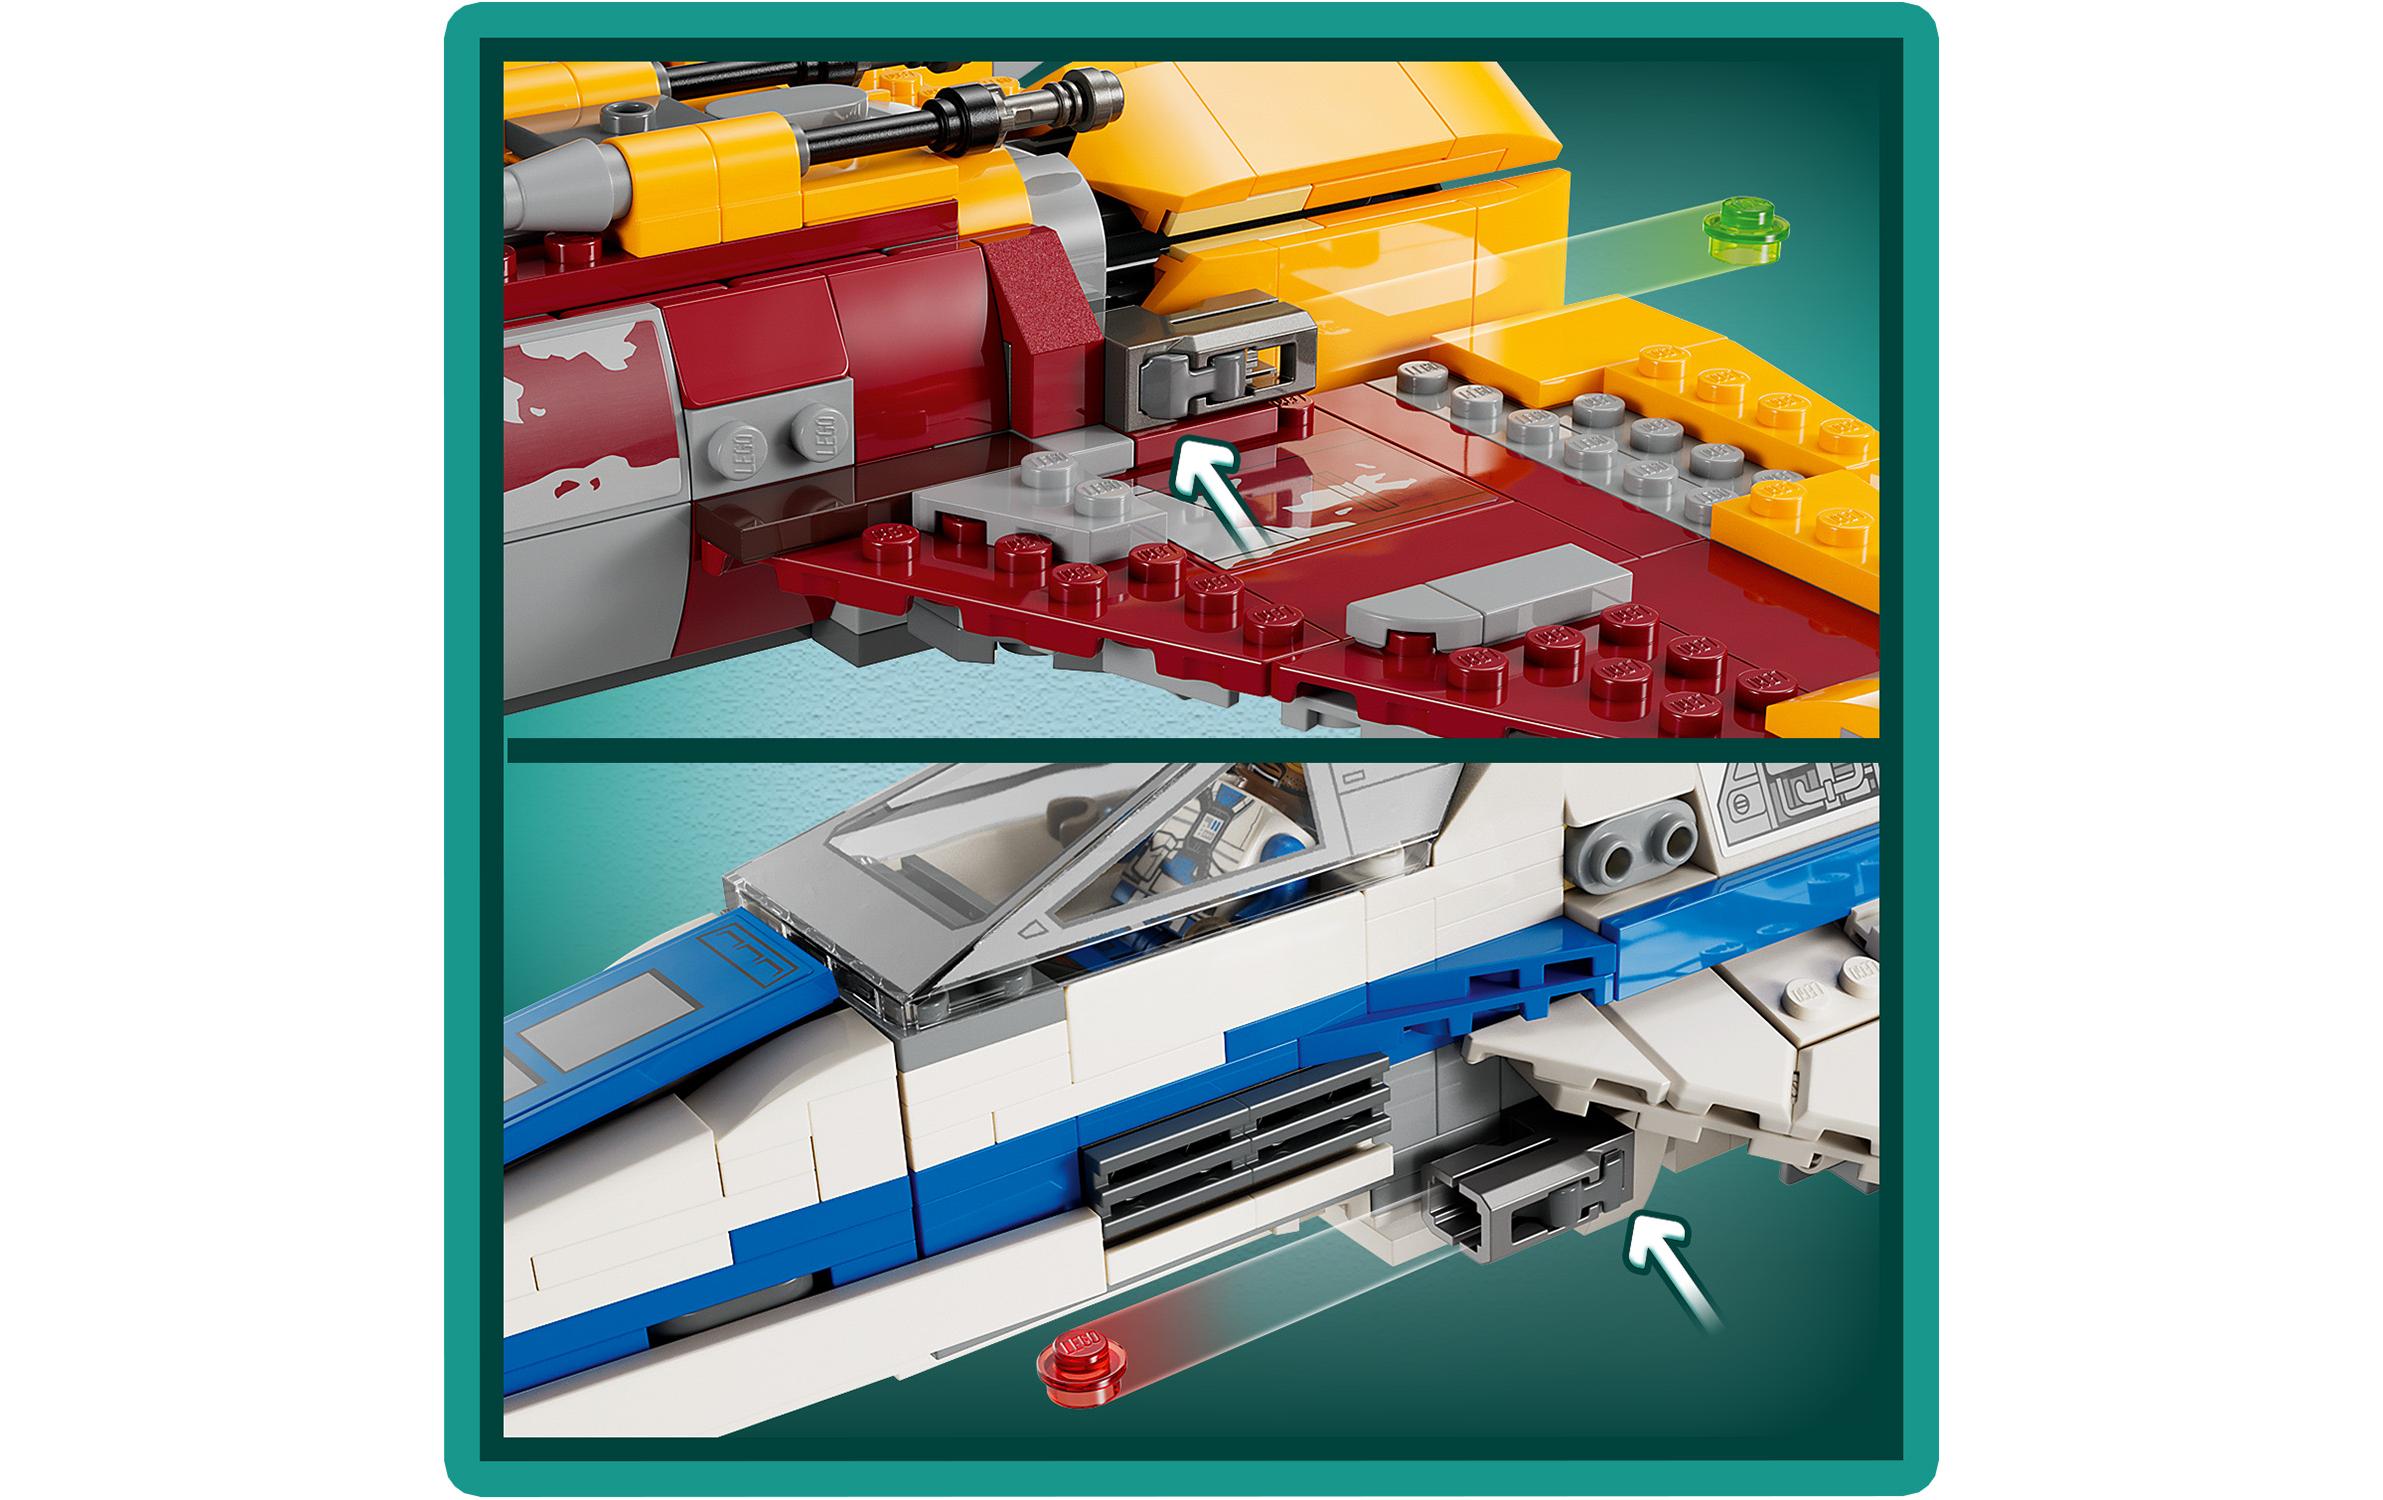 LEGO® Star Wars New Republic E-Wing vs. Shin Hatis Starfighter